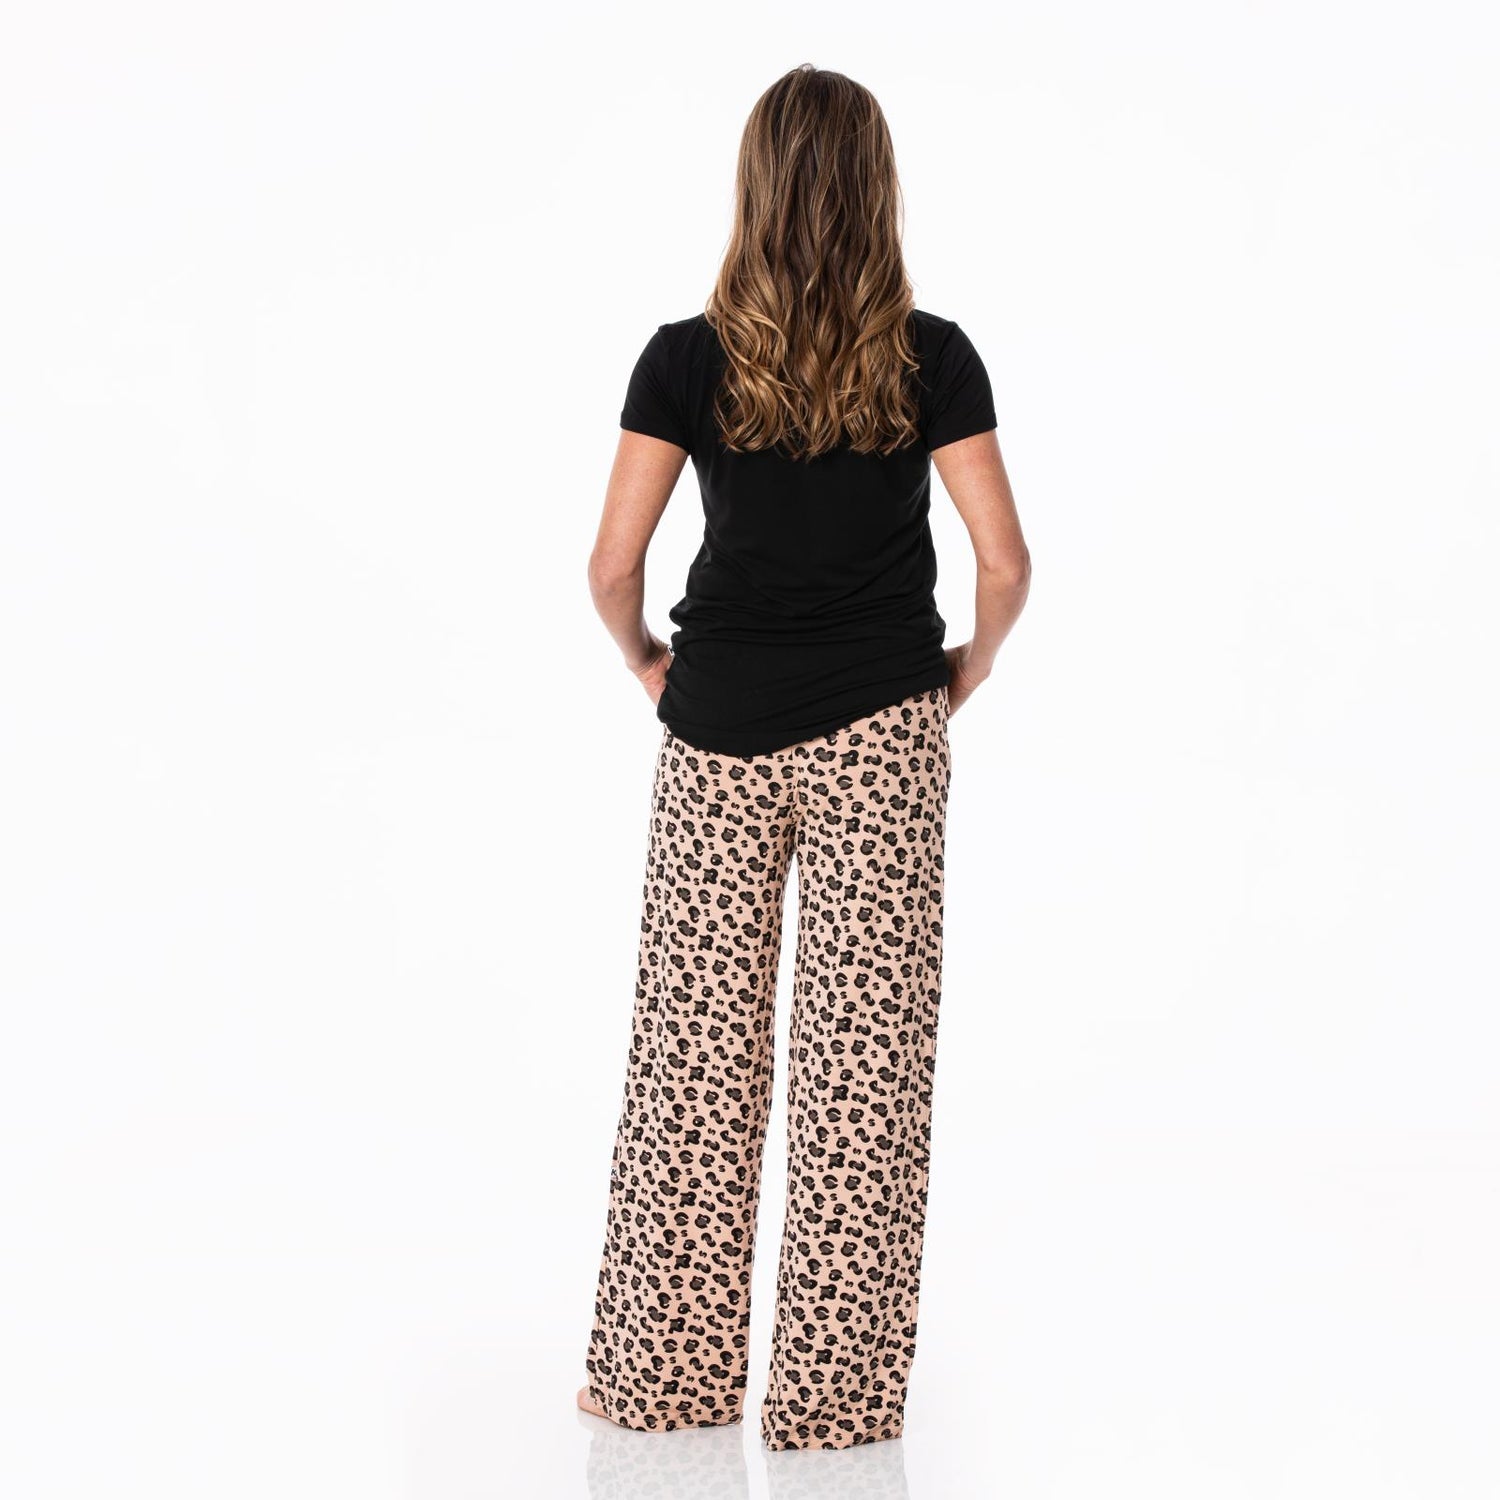 Women's Print Lounge Pants in Suede Cheetah Print